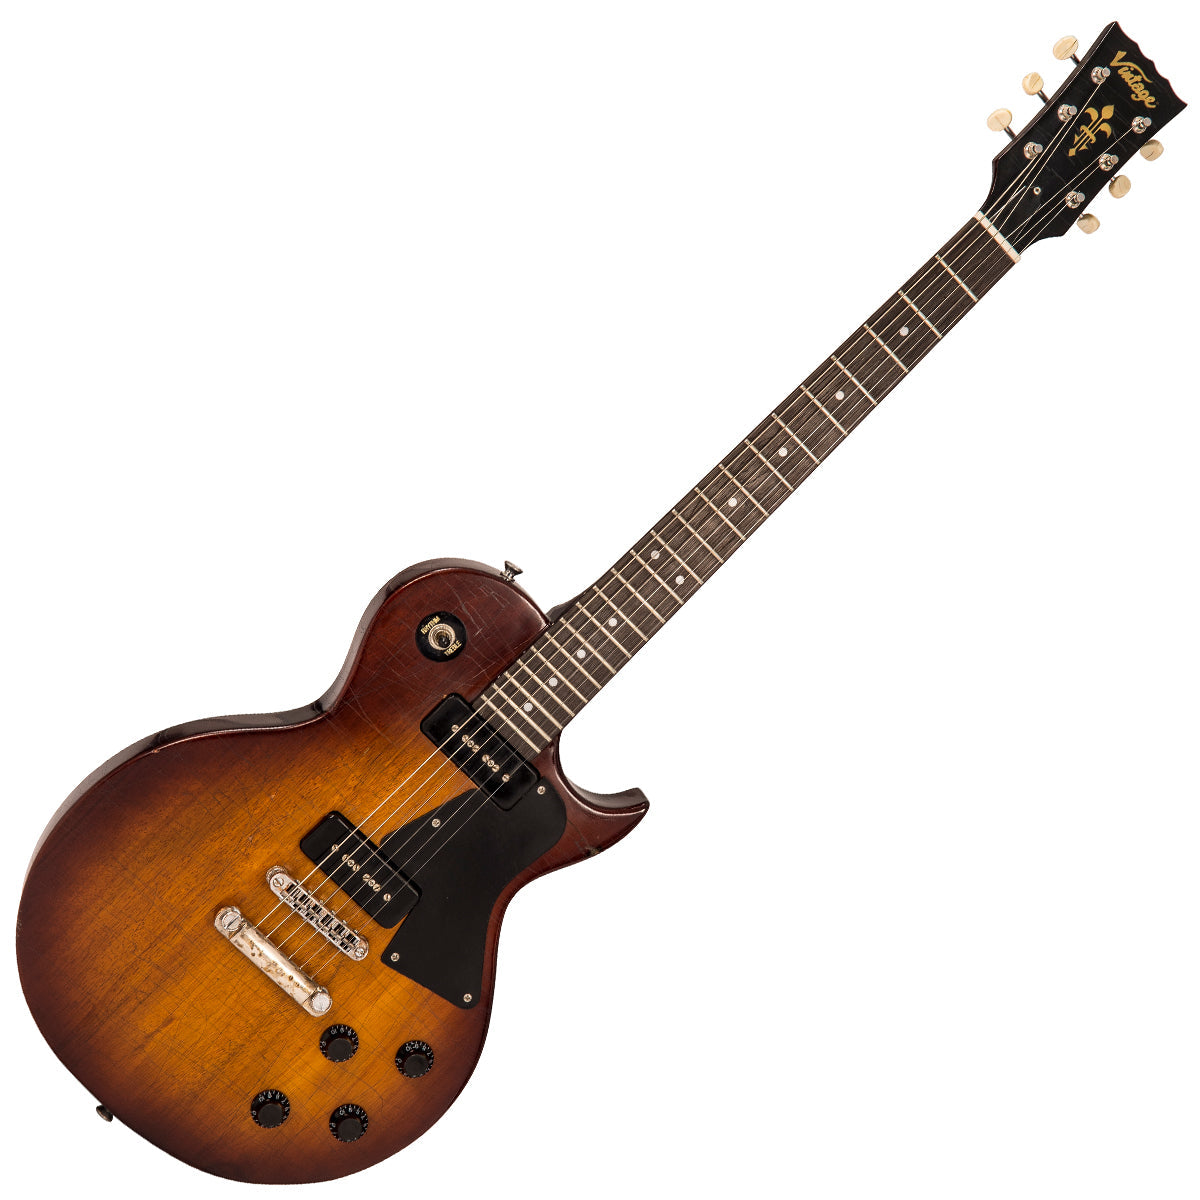 SOLD - Vintage V132 ProShop Unique ~ Heavy Relic, Electric Guitars for sale at Richards Guitars.